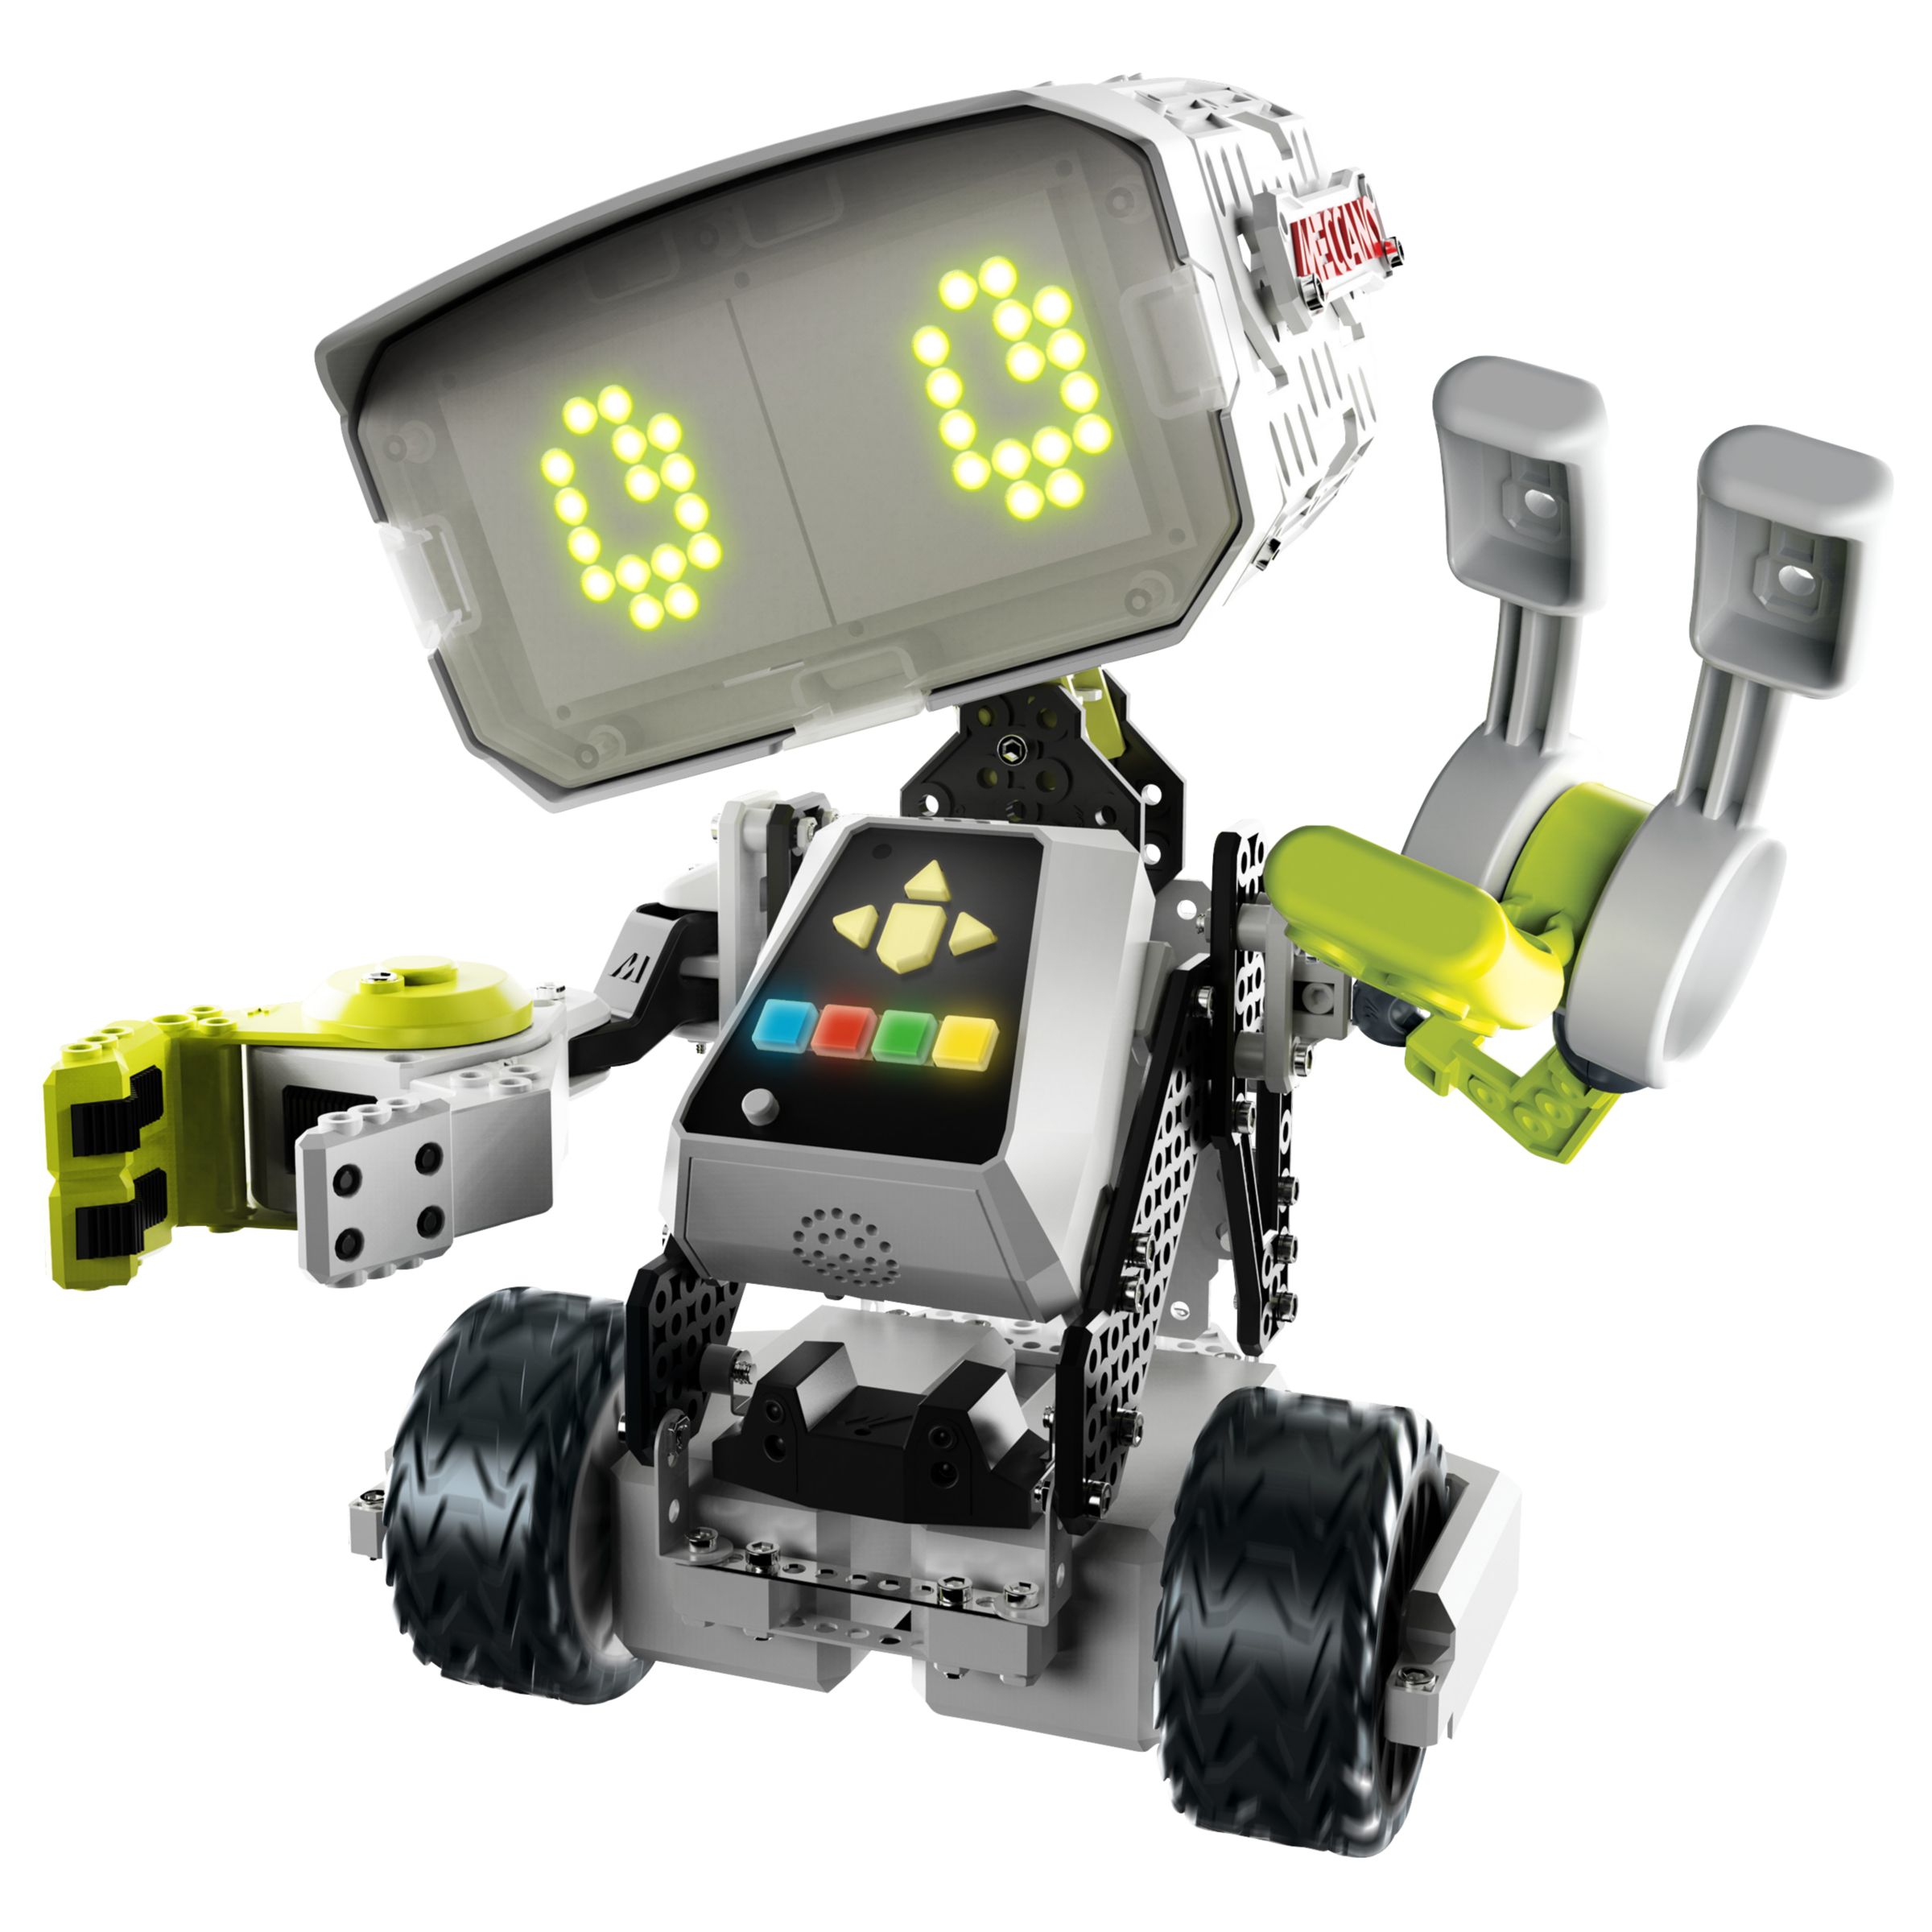 Meccano Robot M.A.X